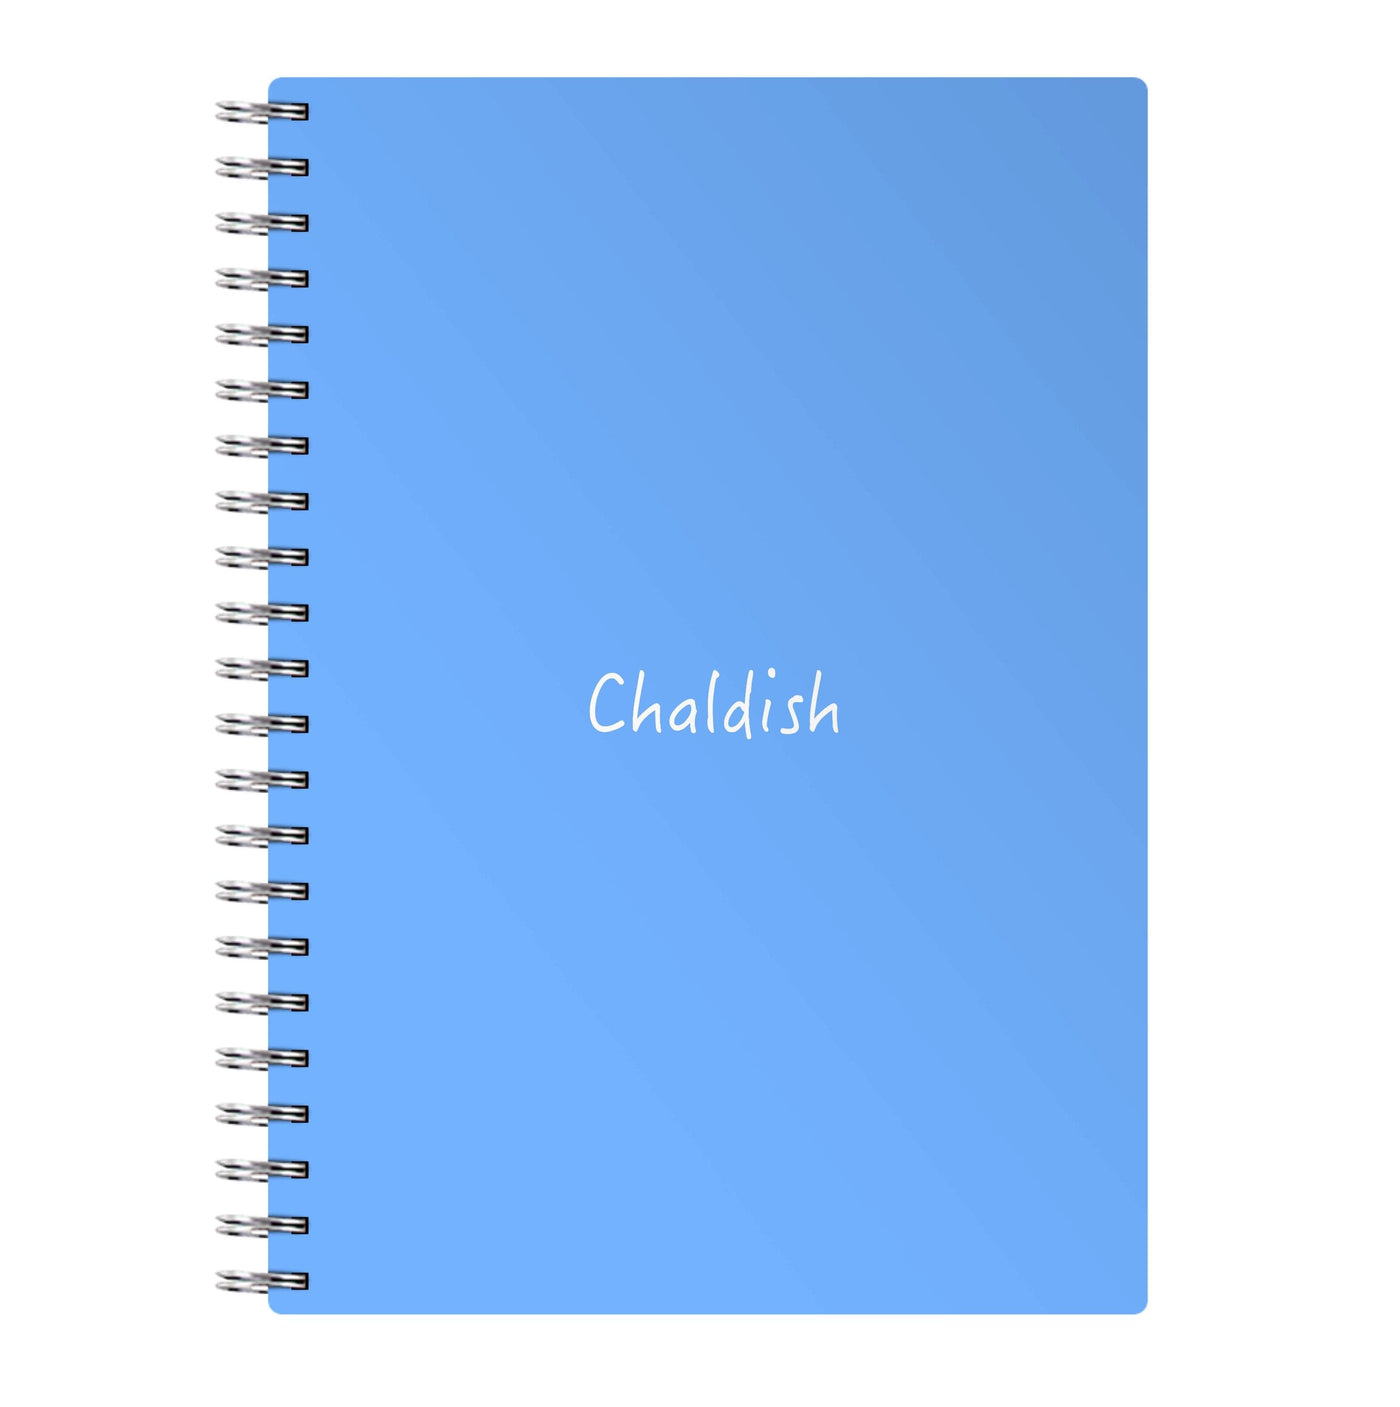 Chaldish - Islanders Notebook